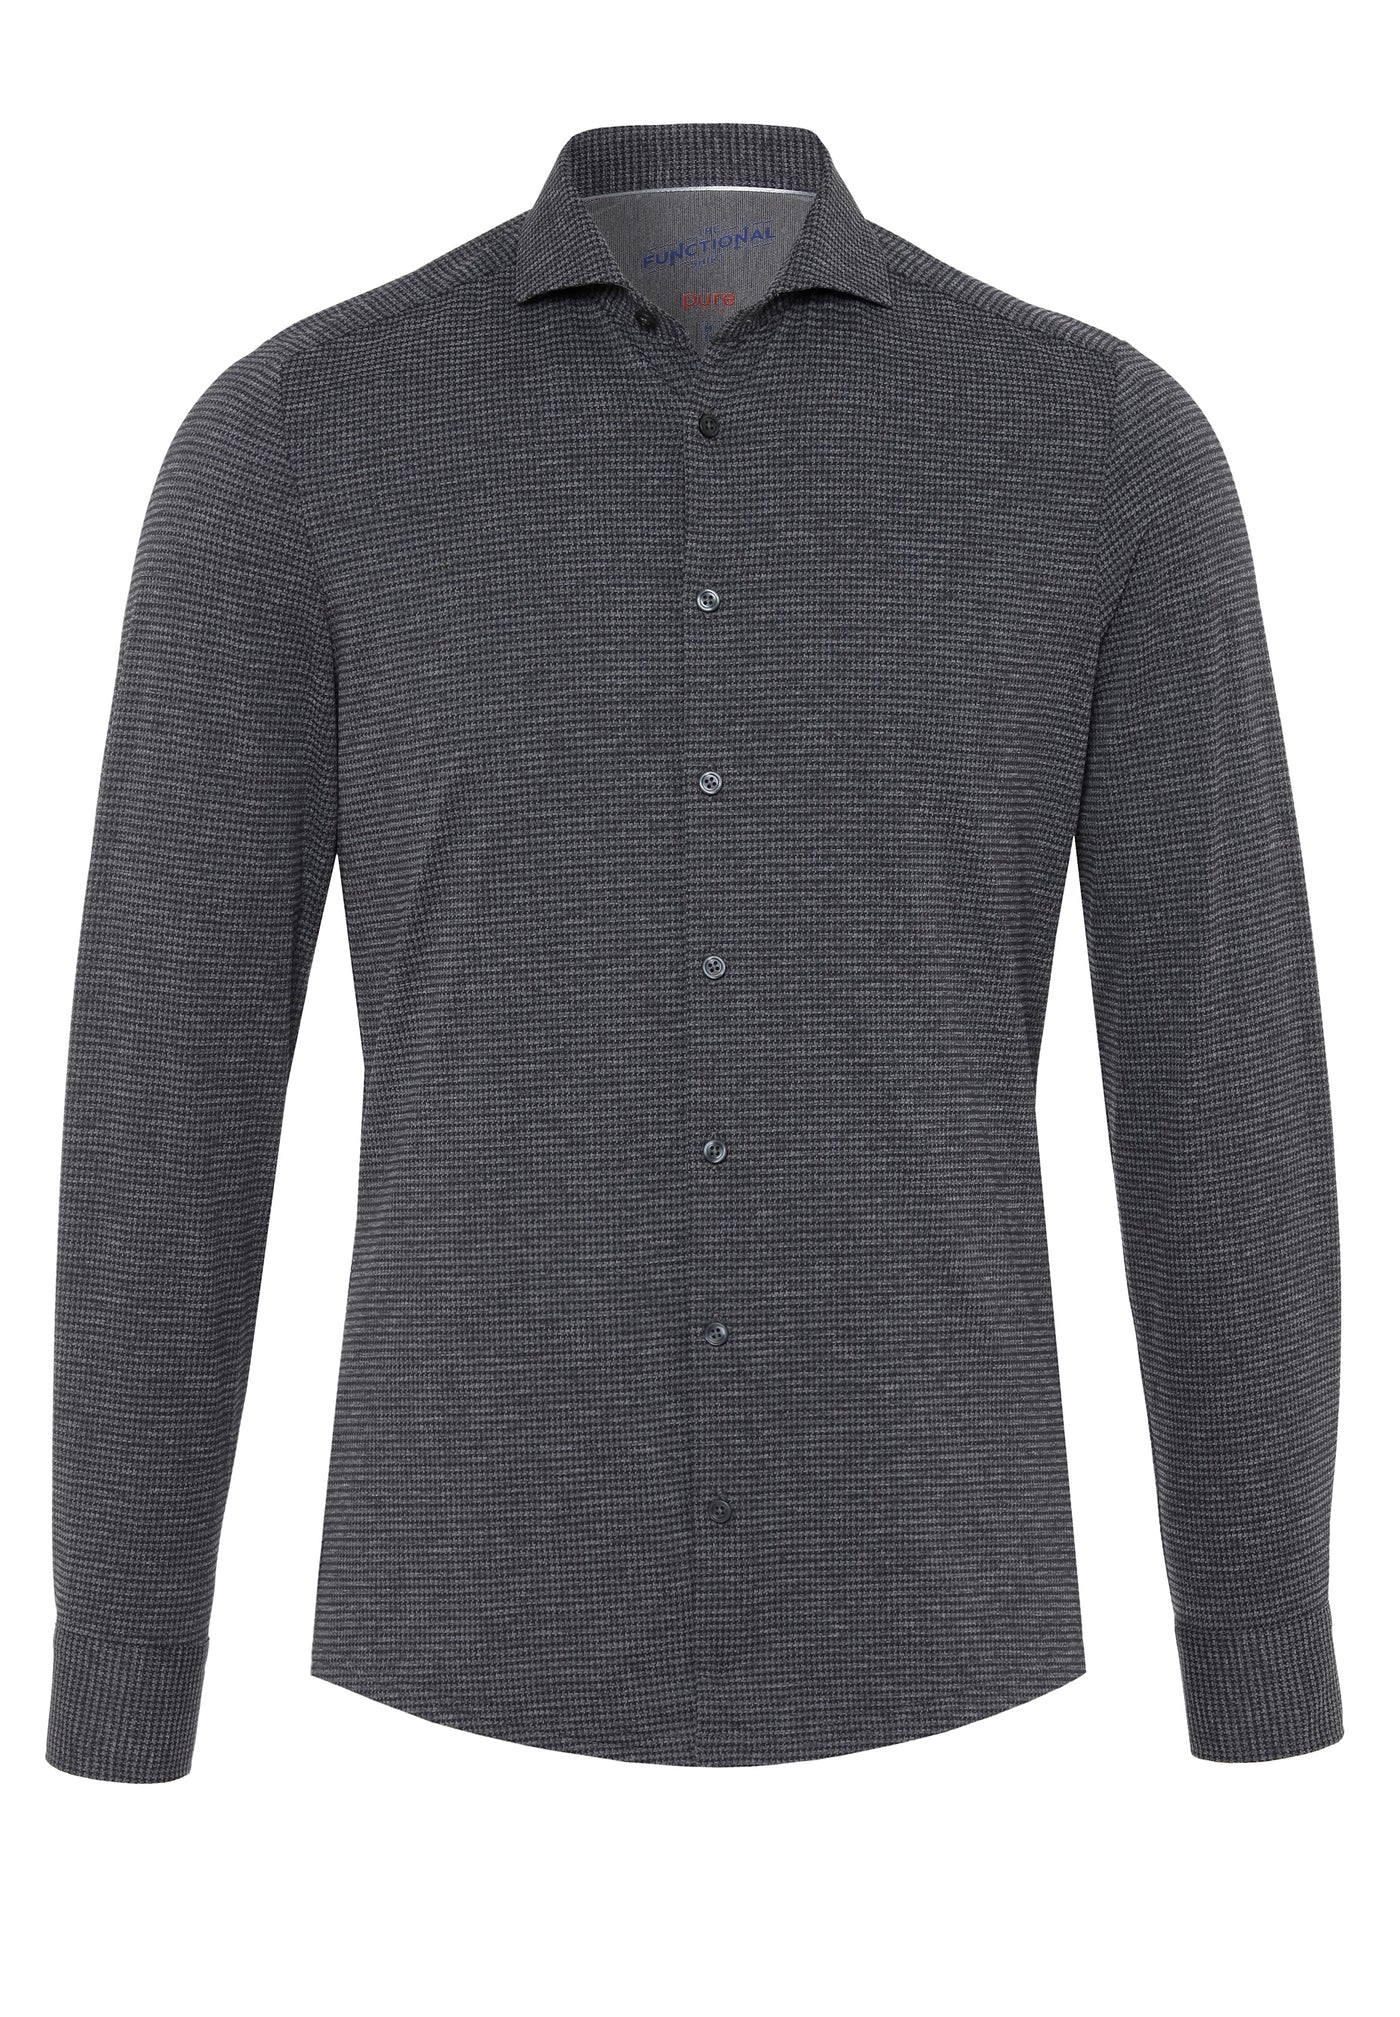 4040-21750 - Functional shirt - grey